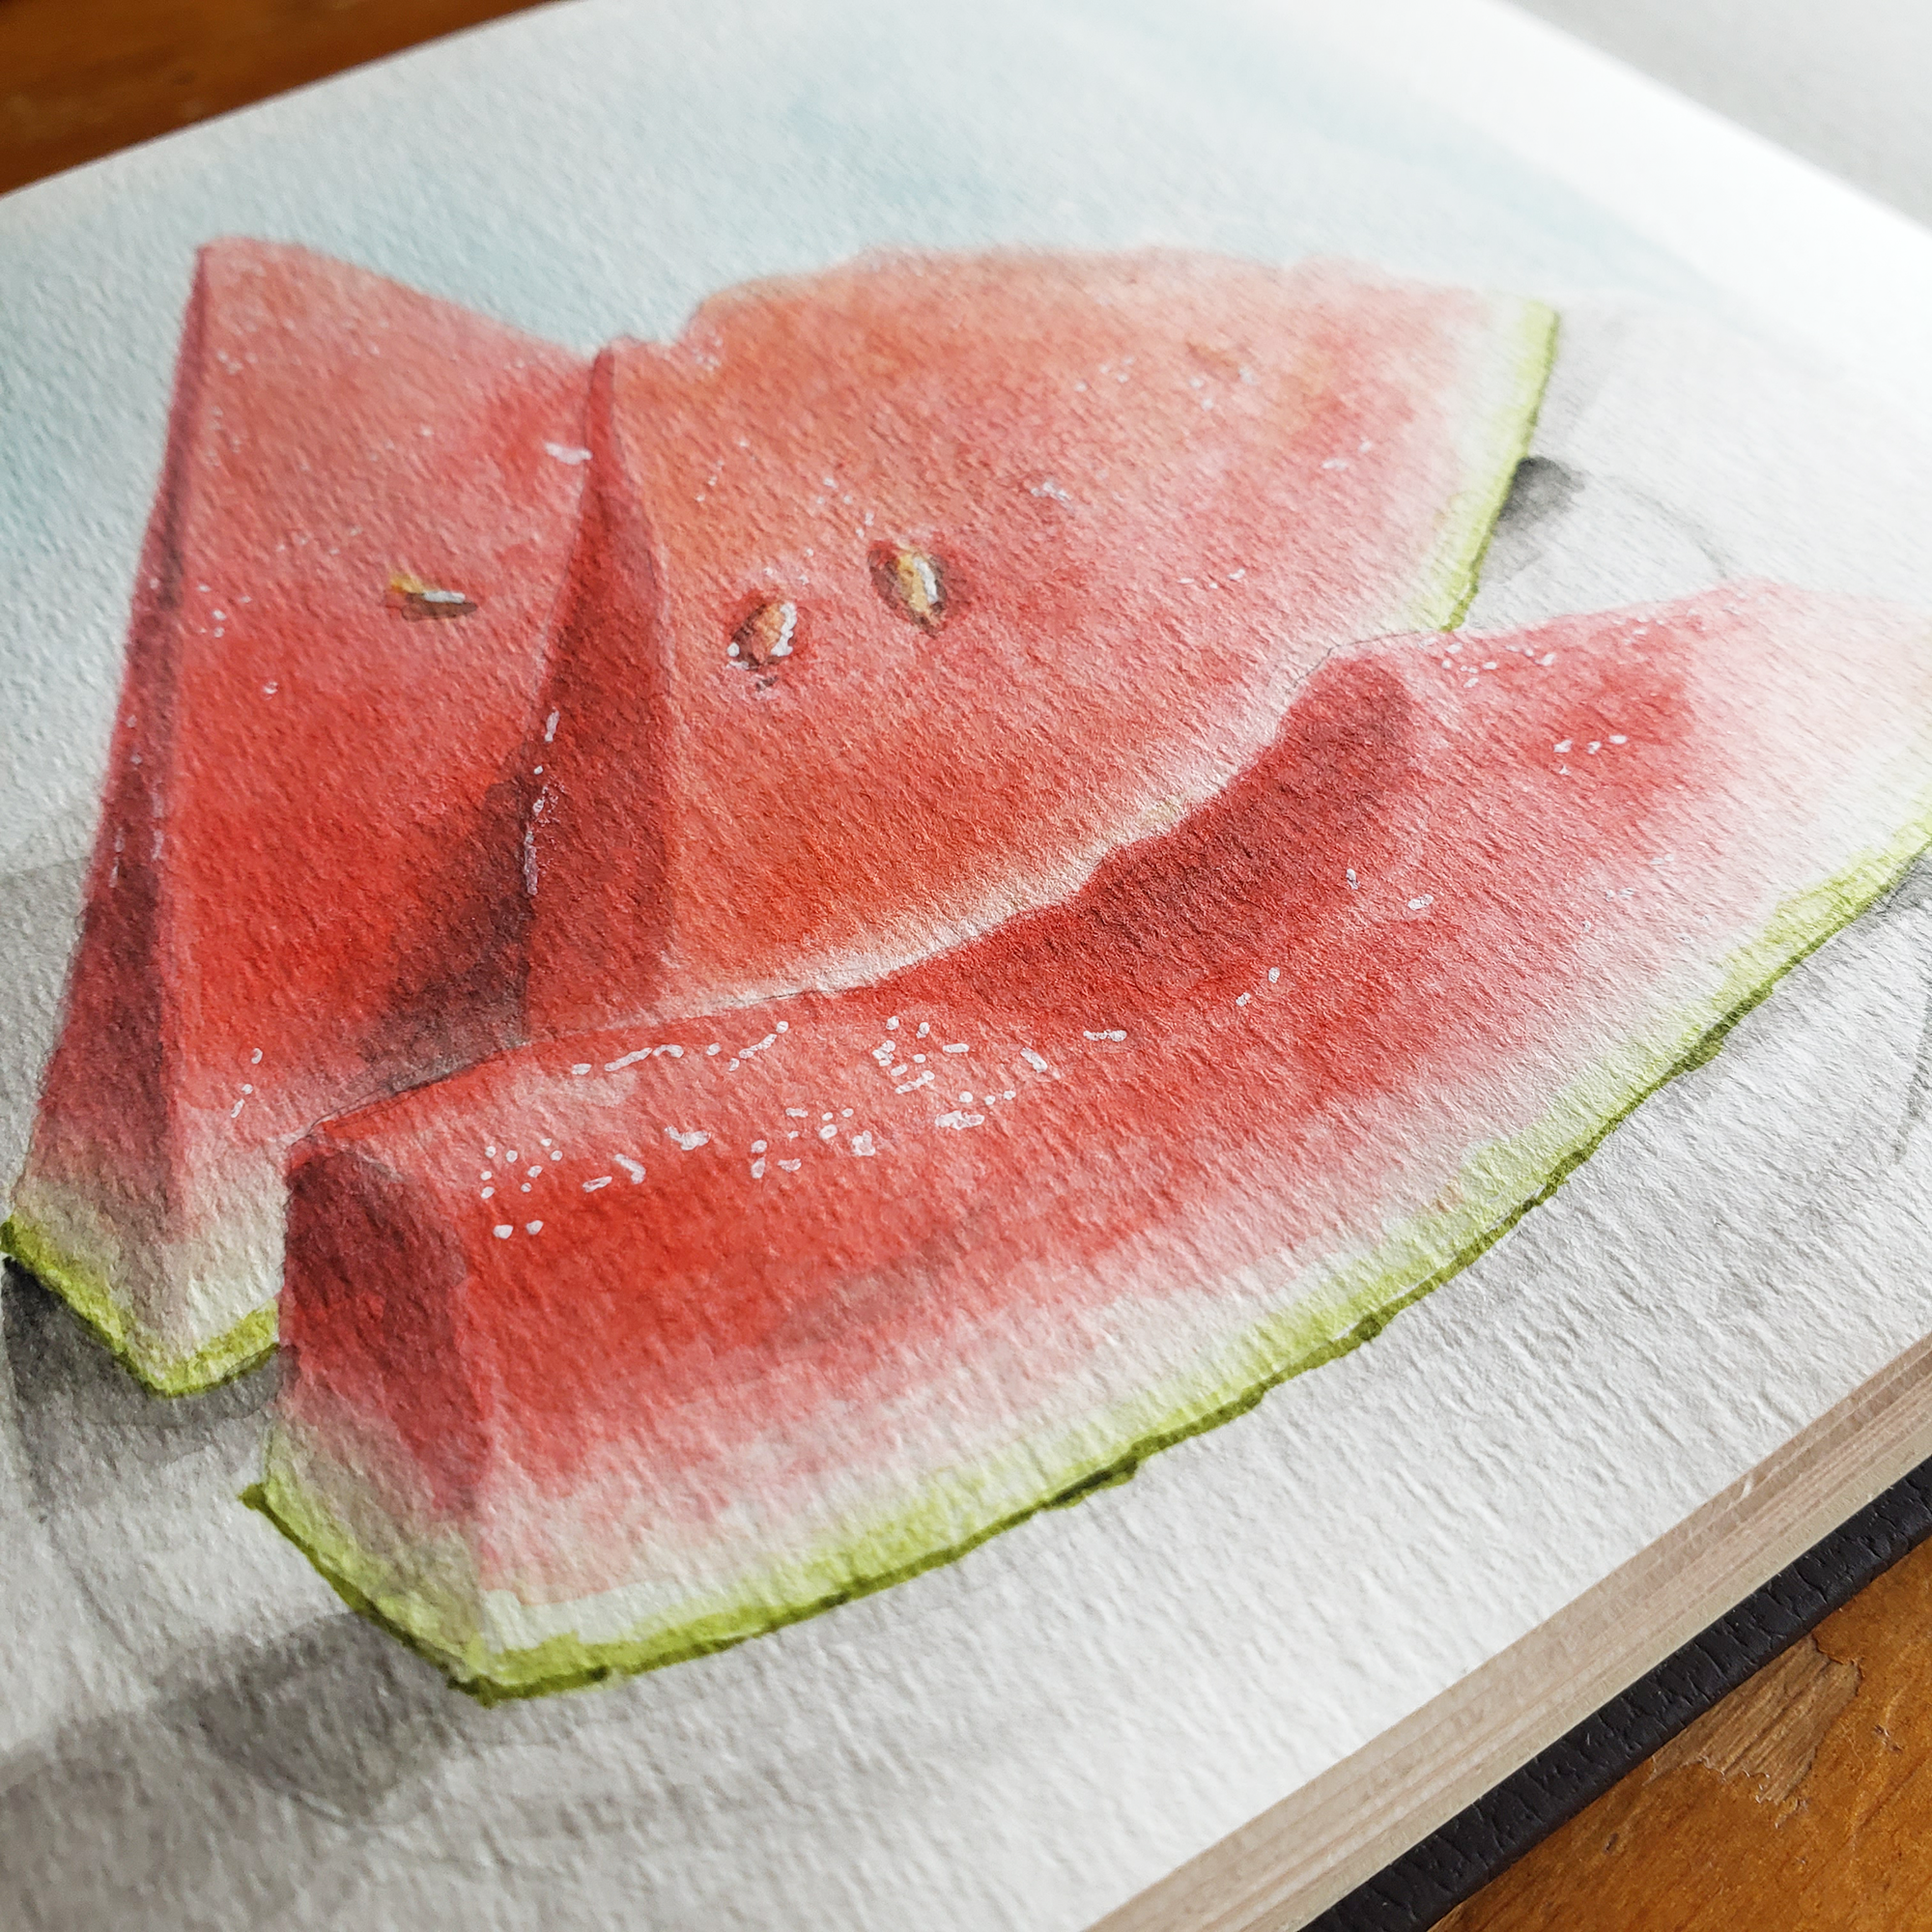 Watermelon Slice Cartoon Style Vector Illustration Stock Illustration -  Download Image Now - iStock